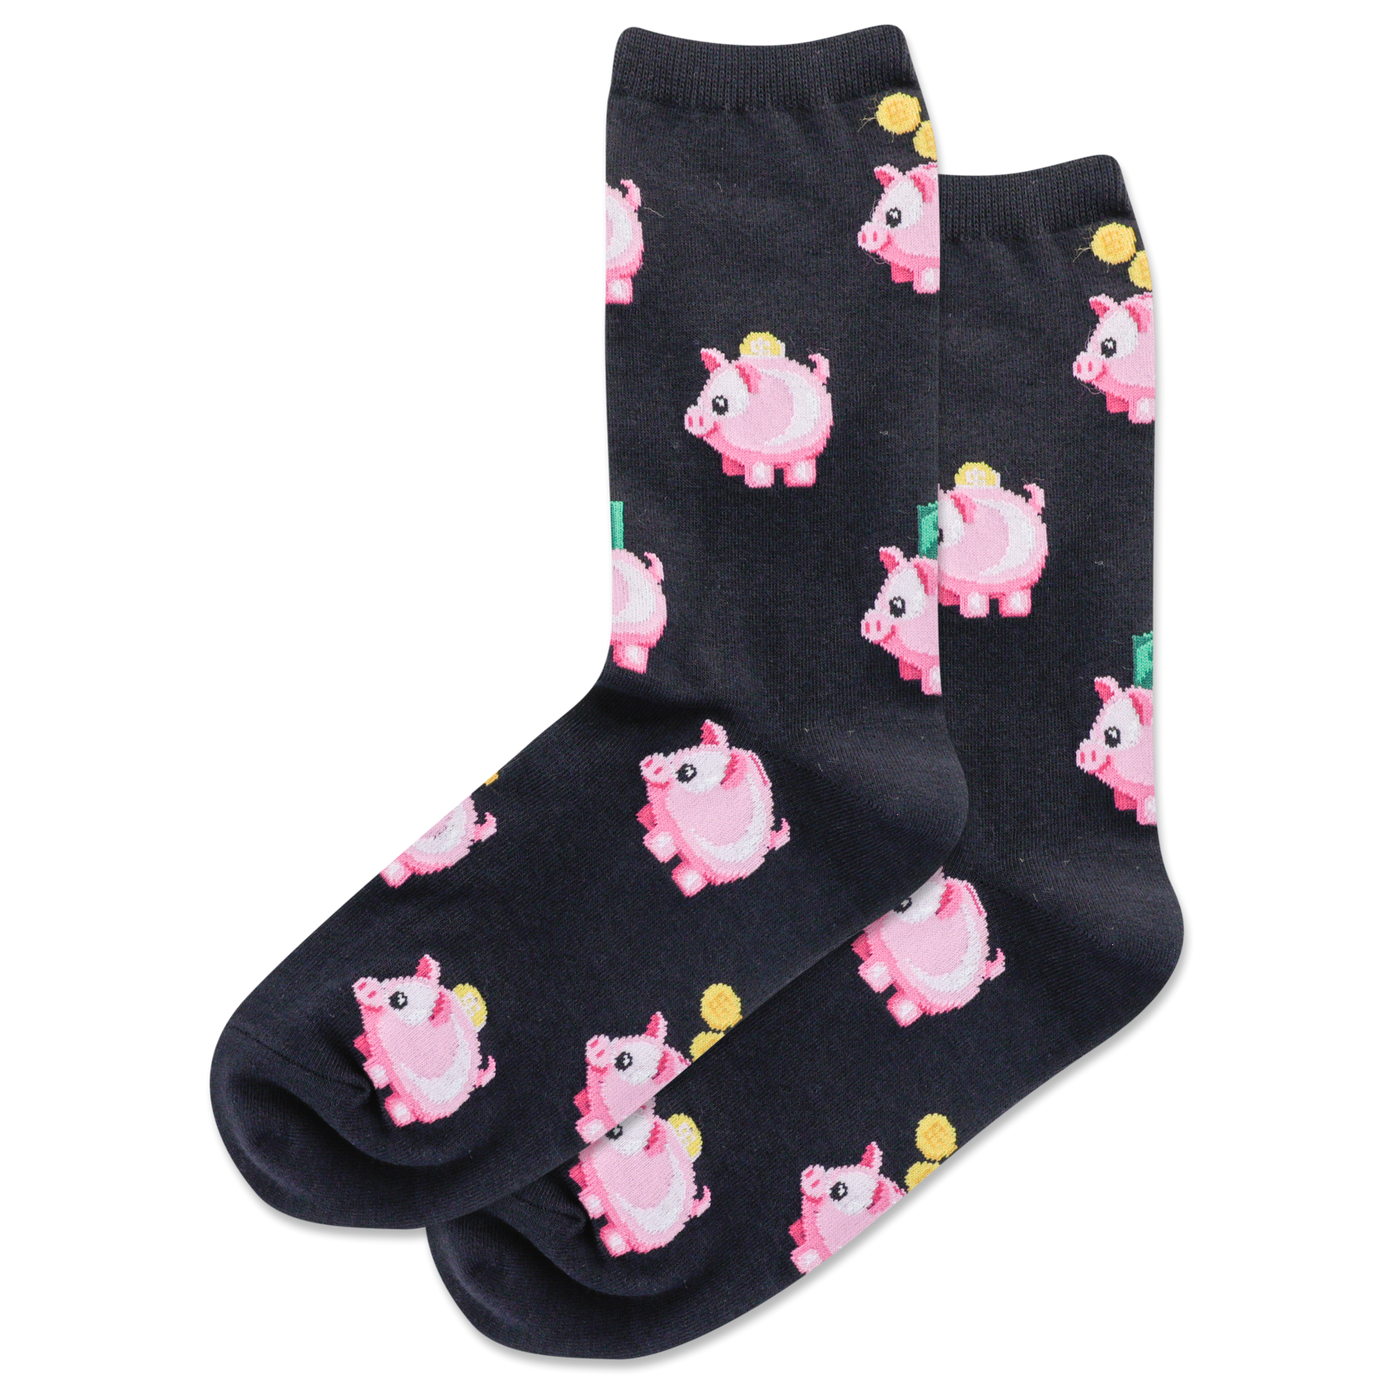 "Piggy Bank" Crew Socks by Hot Sox - Medium